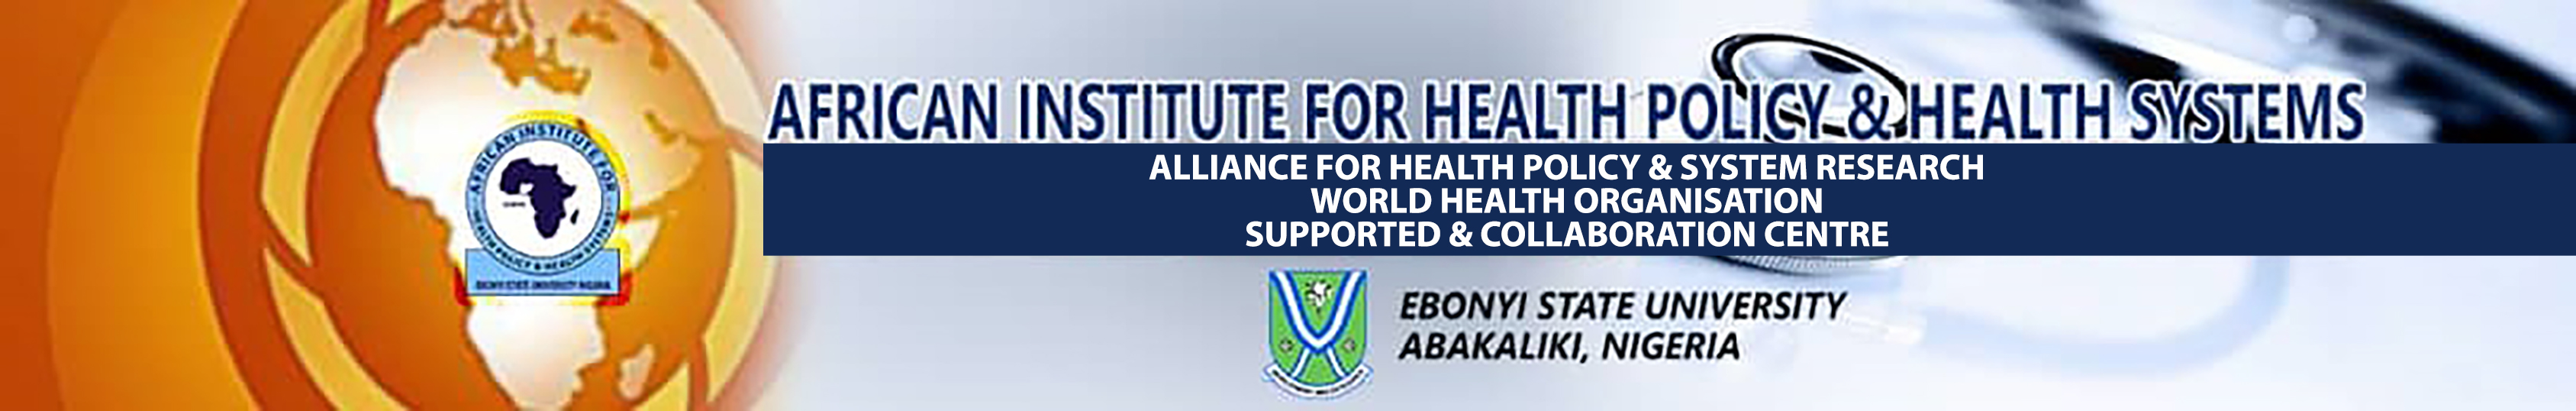 Federal Teaching Hospital, Abakaliki -Ebonyi State